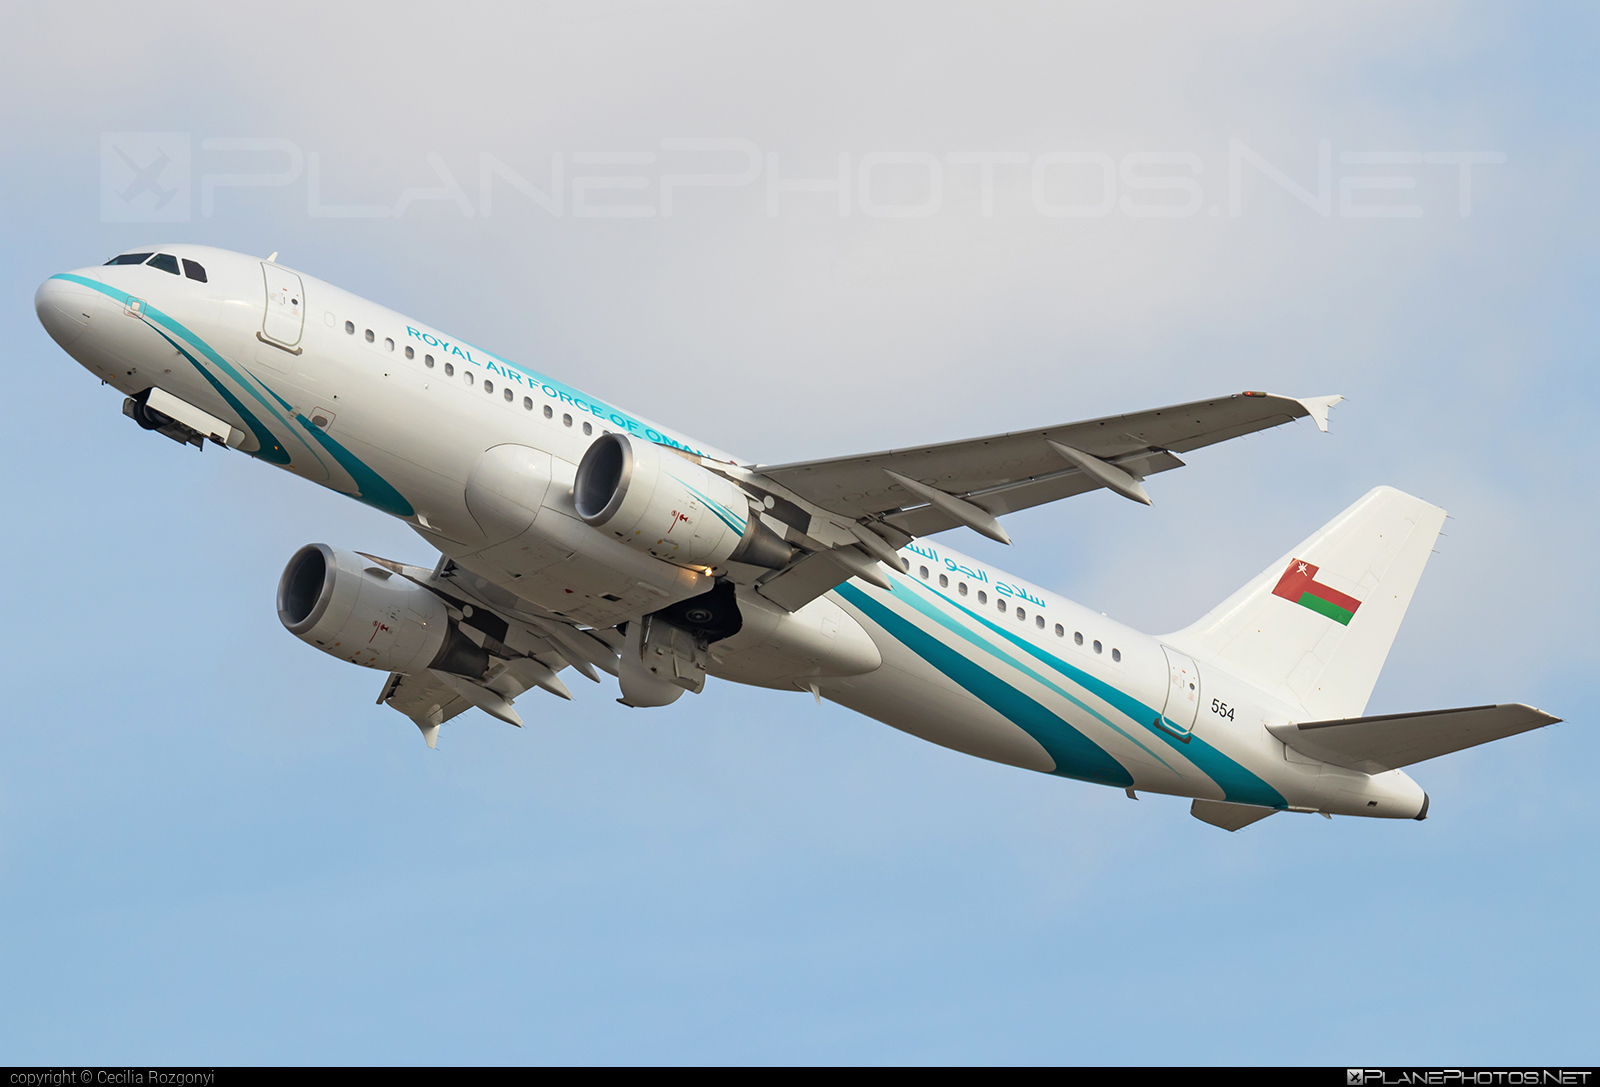 Airbus A320-214 - 554 operated by Silāh al-Jaww as-Sultāniy ‘Umān (Royal Air Force of Oman) #a320 #a320family #airbus #airbus320 #royalAirForceOfOman #silahAlJawwAsSultaniyUman